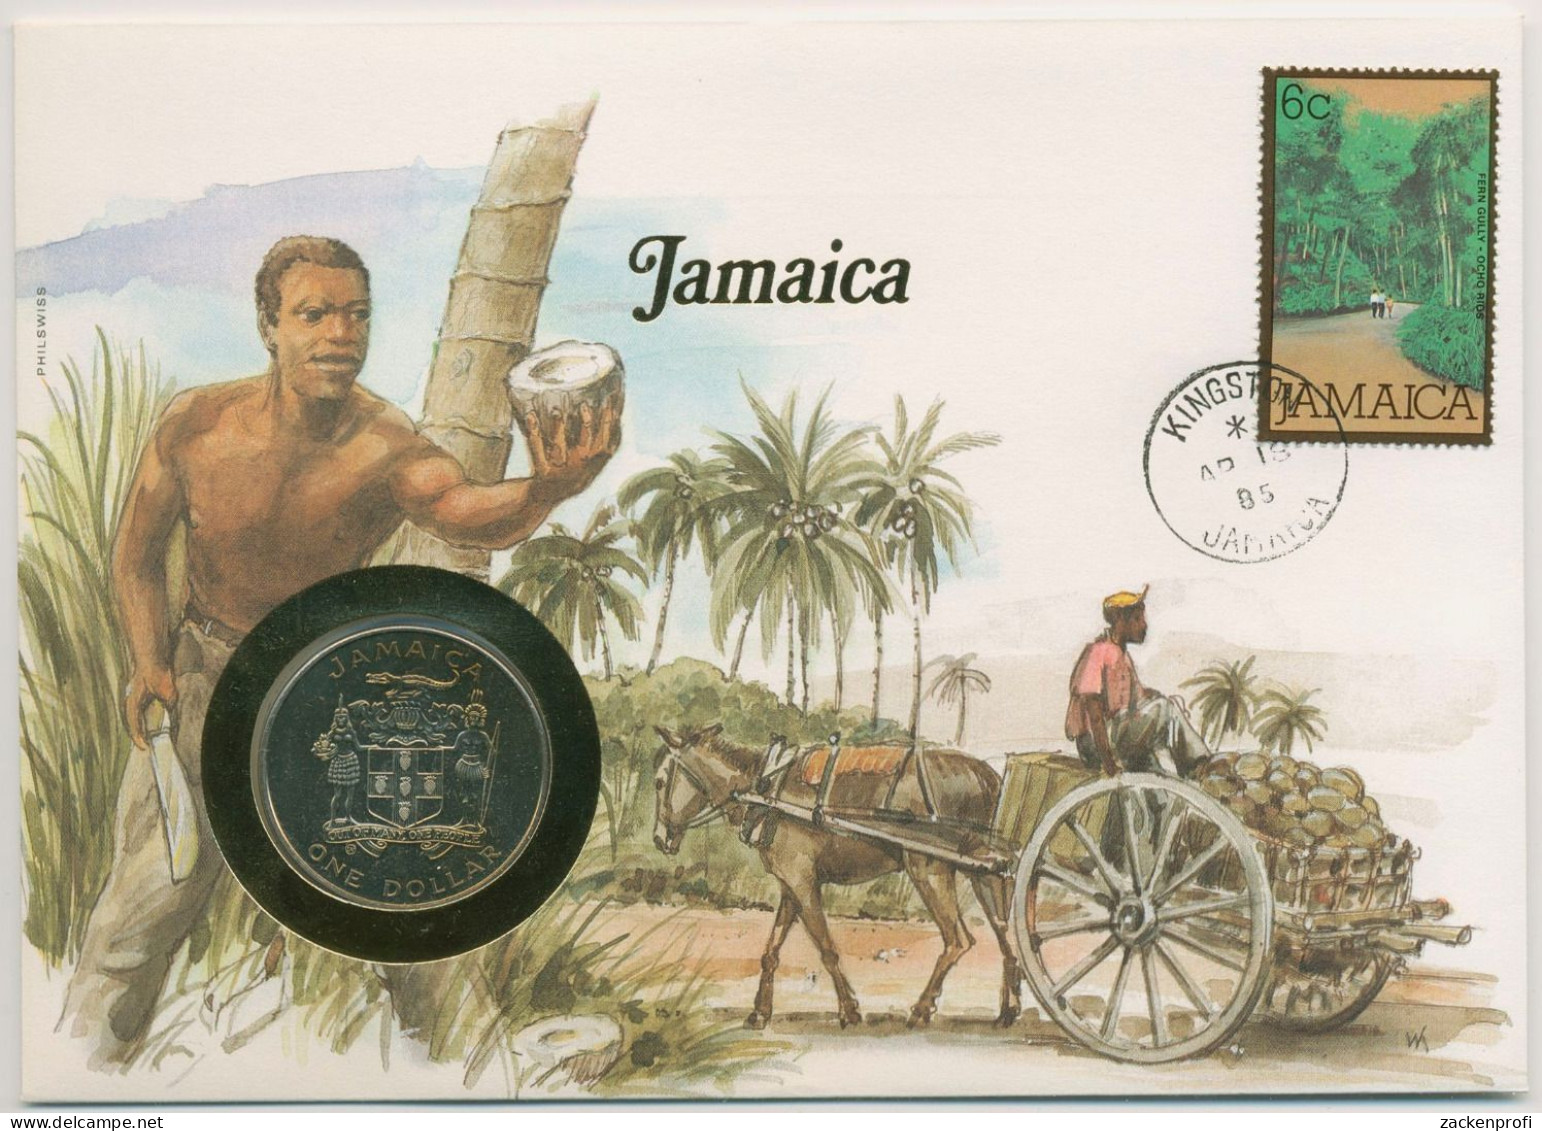 Jamaika 1985 Kokosnussernte Numisbrief 1 Dollar (N467) - Jamaica